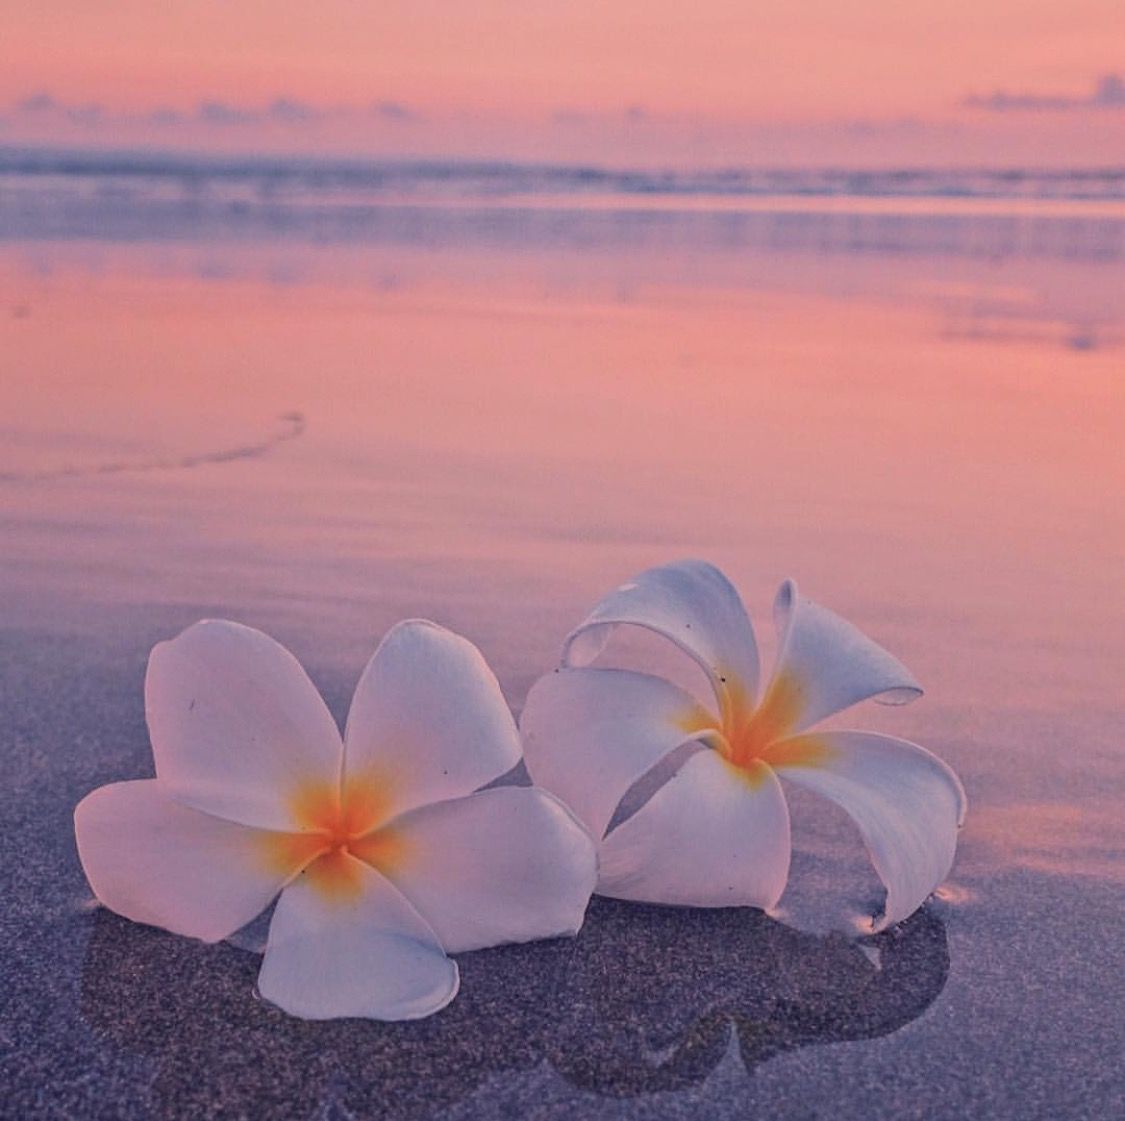 ❣ plumeria flower ocean sea beach sunrise sunset. Beautiful